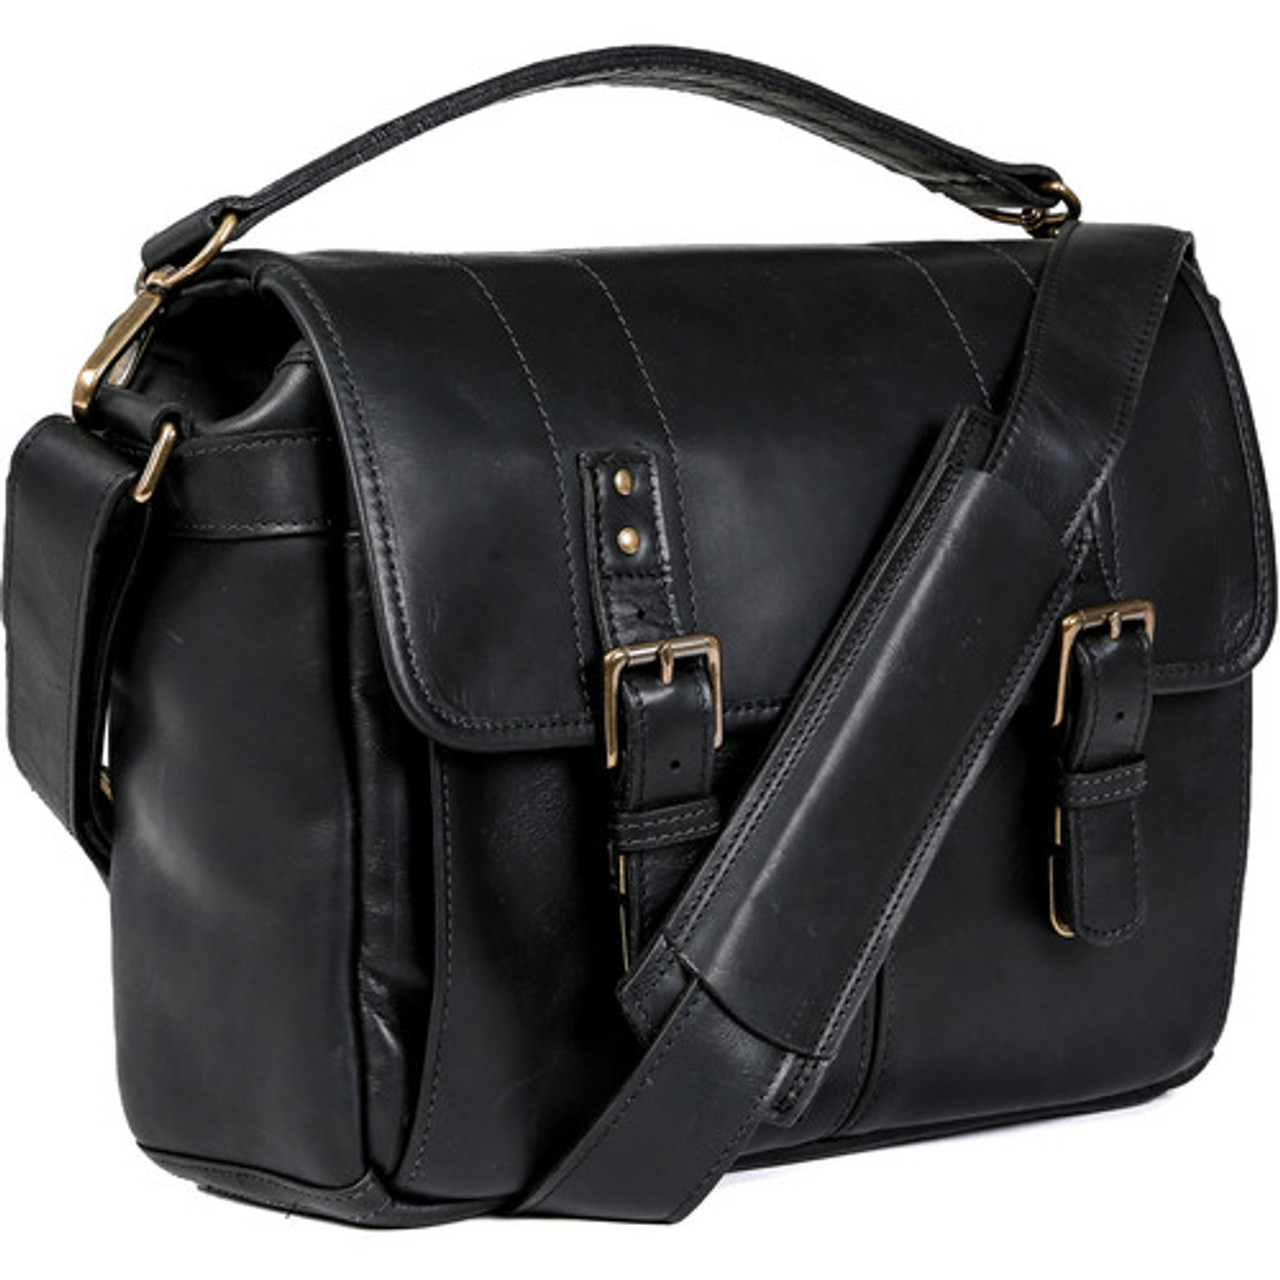 ONA Prince Street Camera Messenger Bag (Black, Italian Leather) - Ace Photo